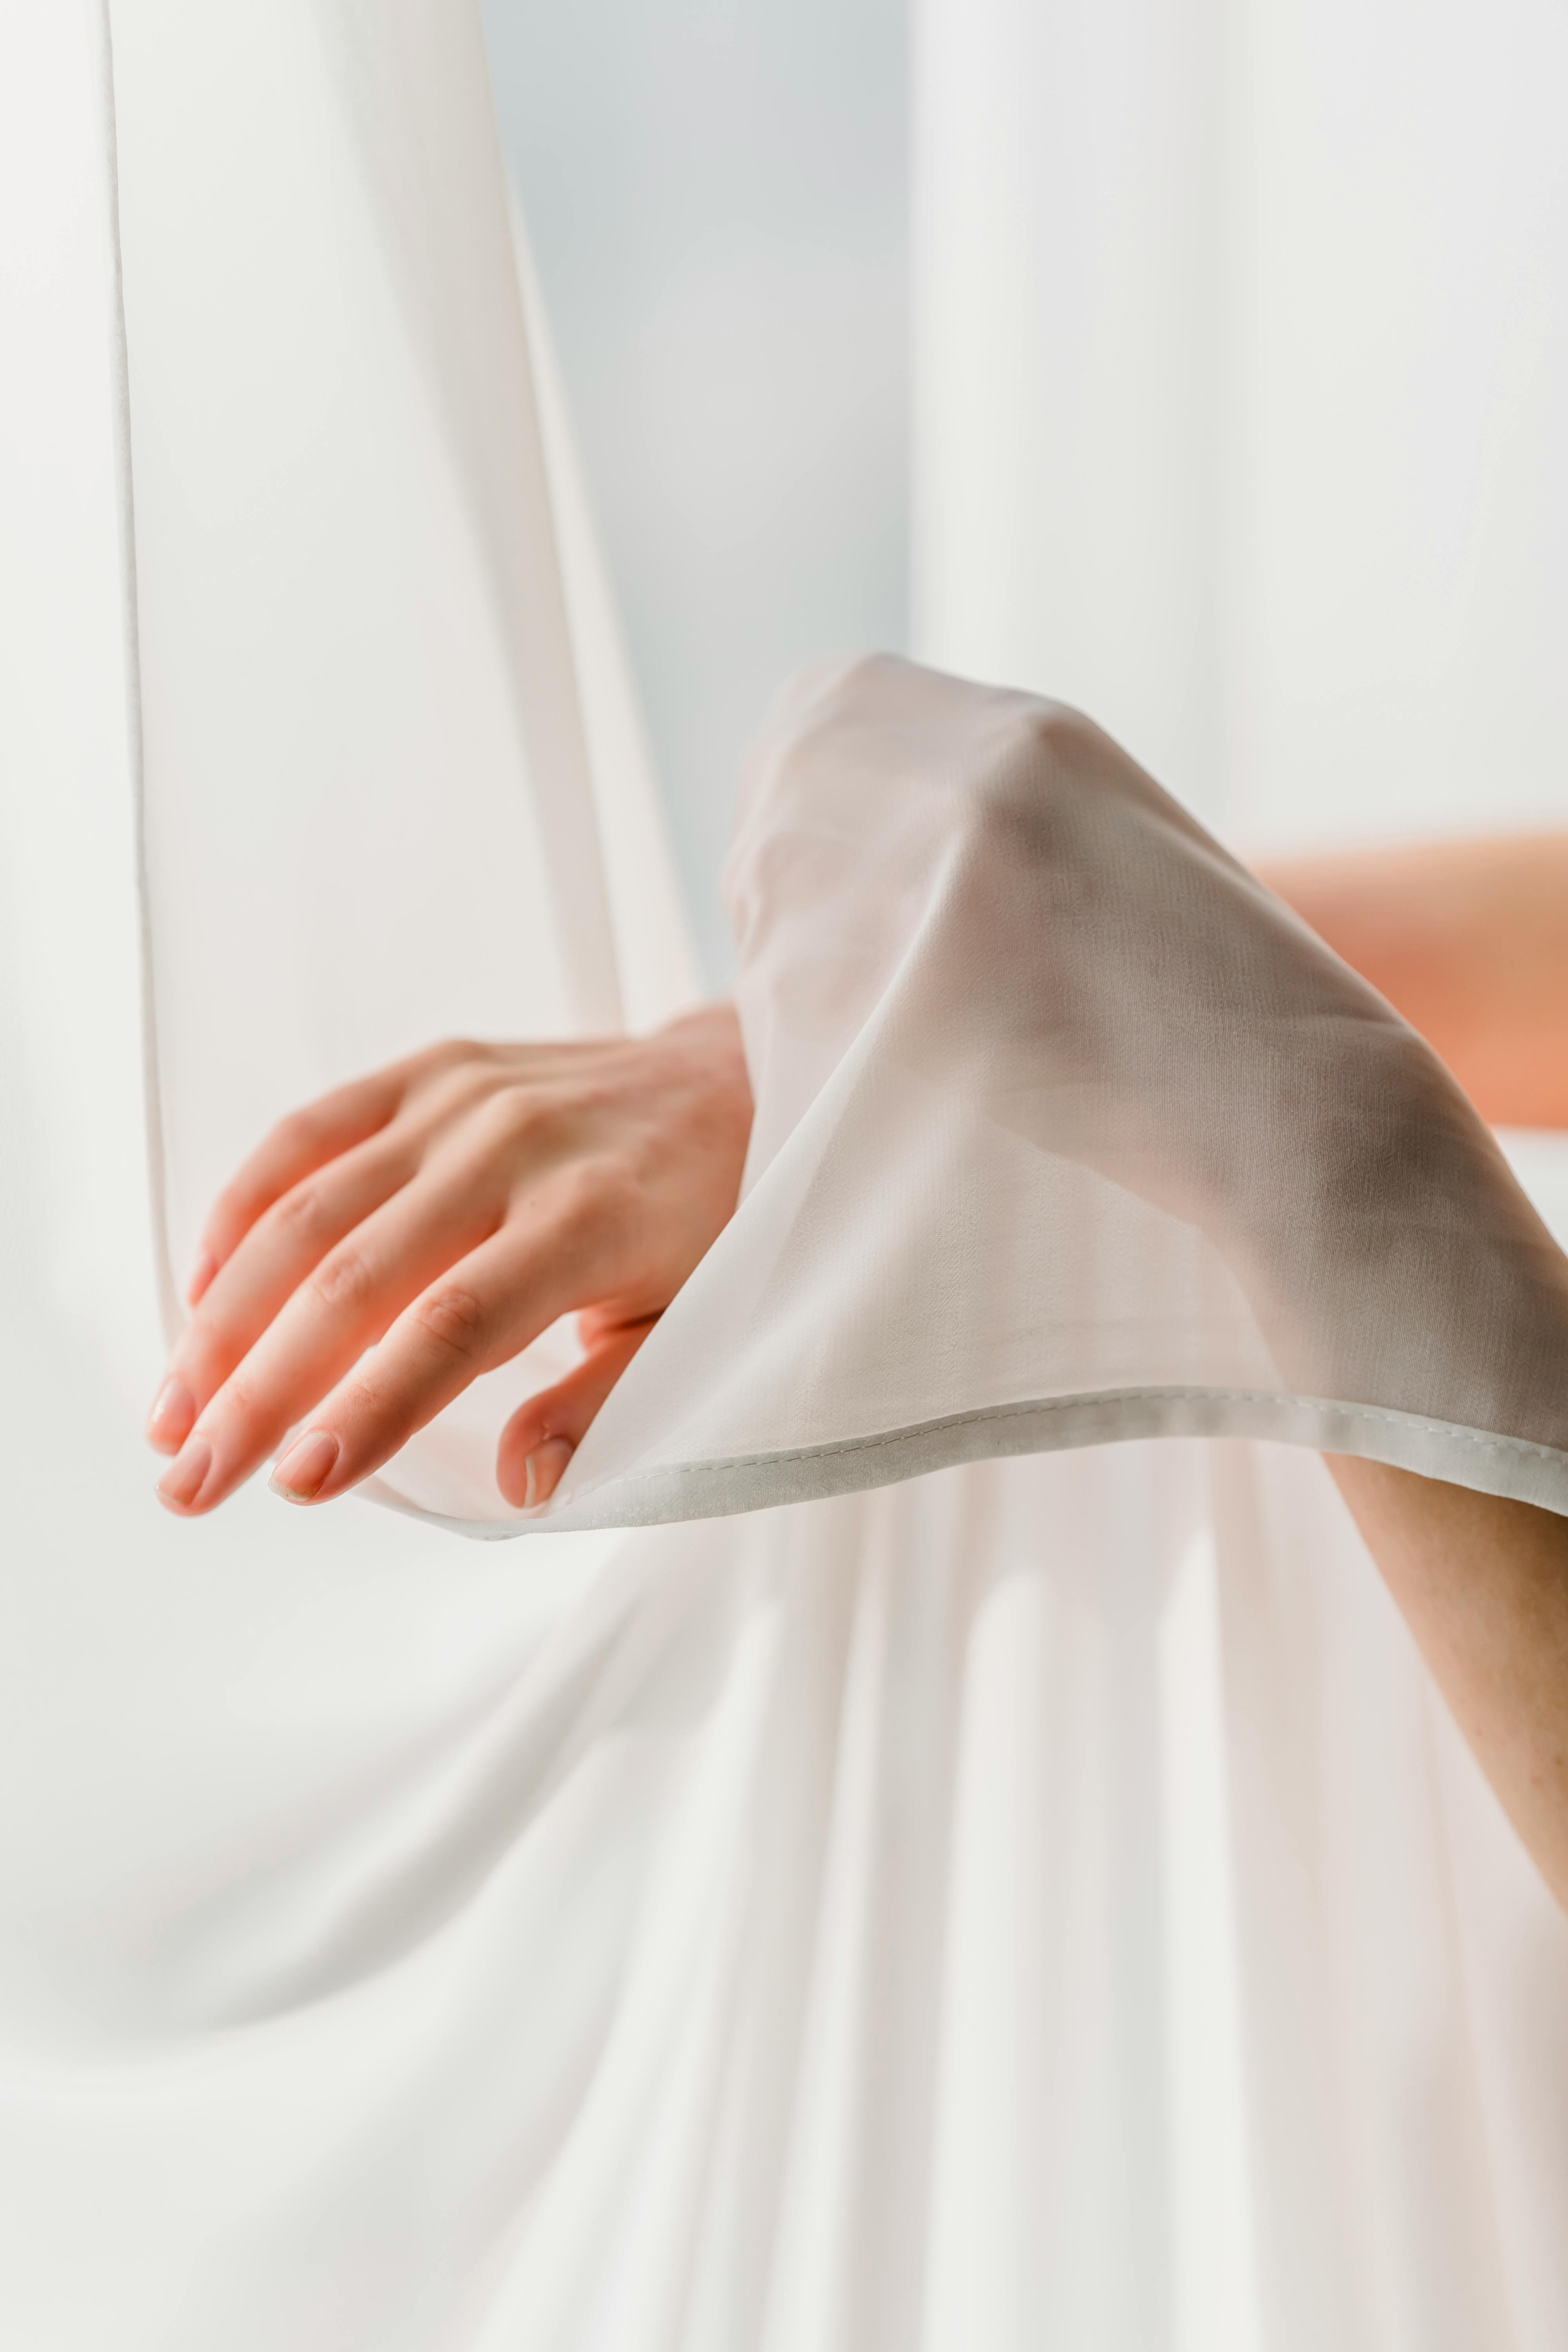 faceless woman touching chiffon curtains tenderly